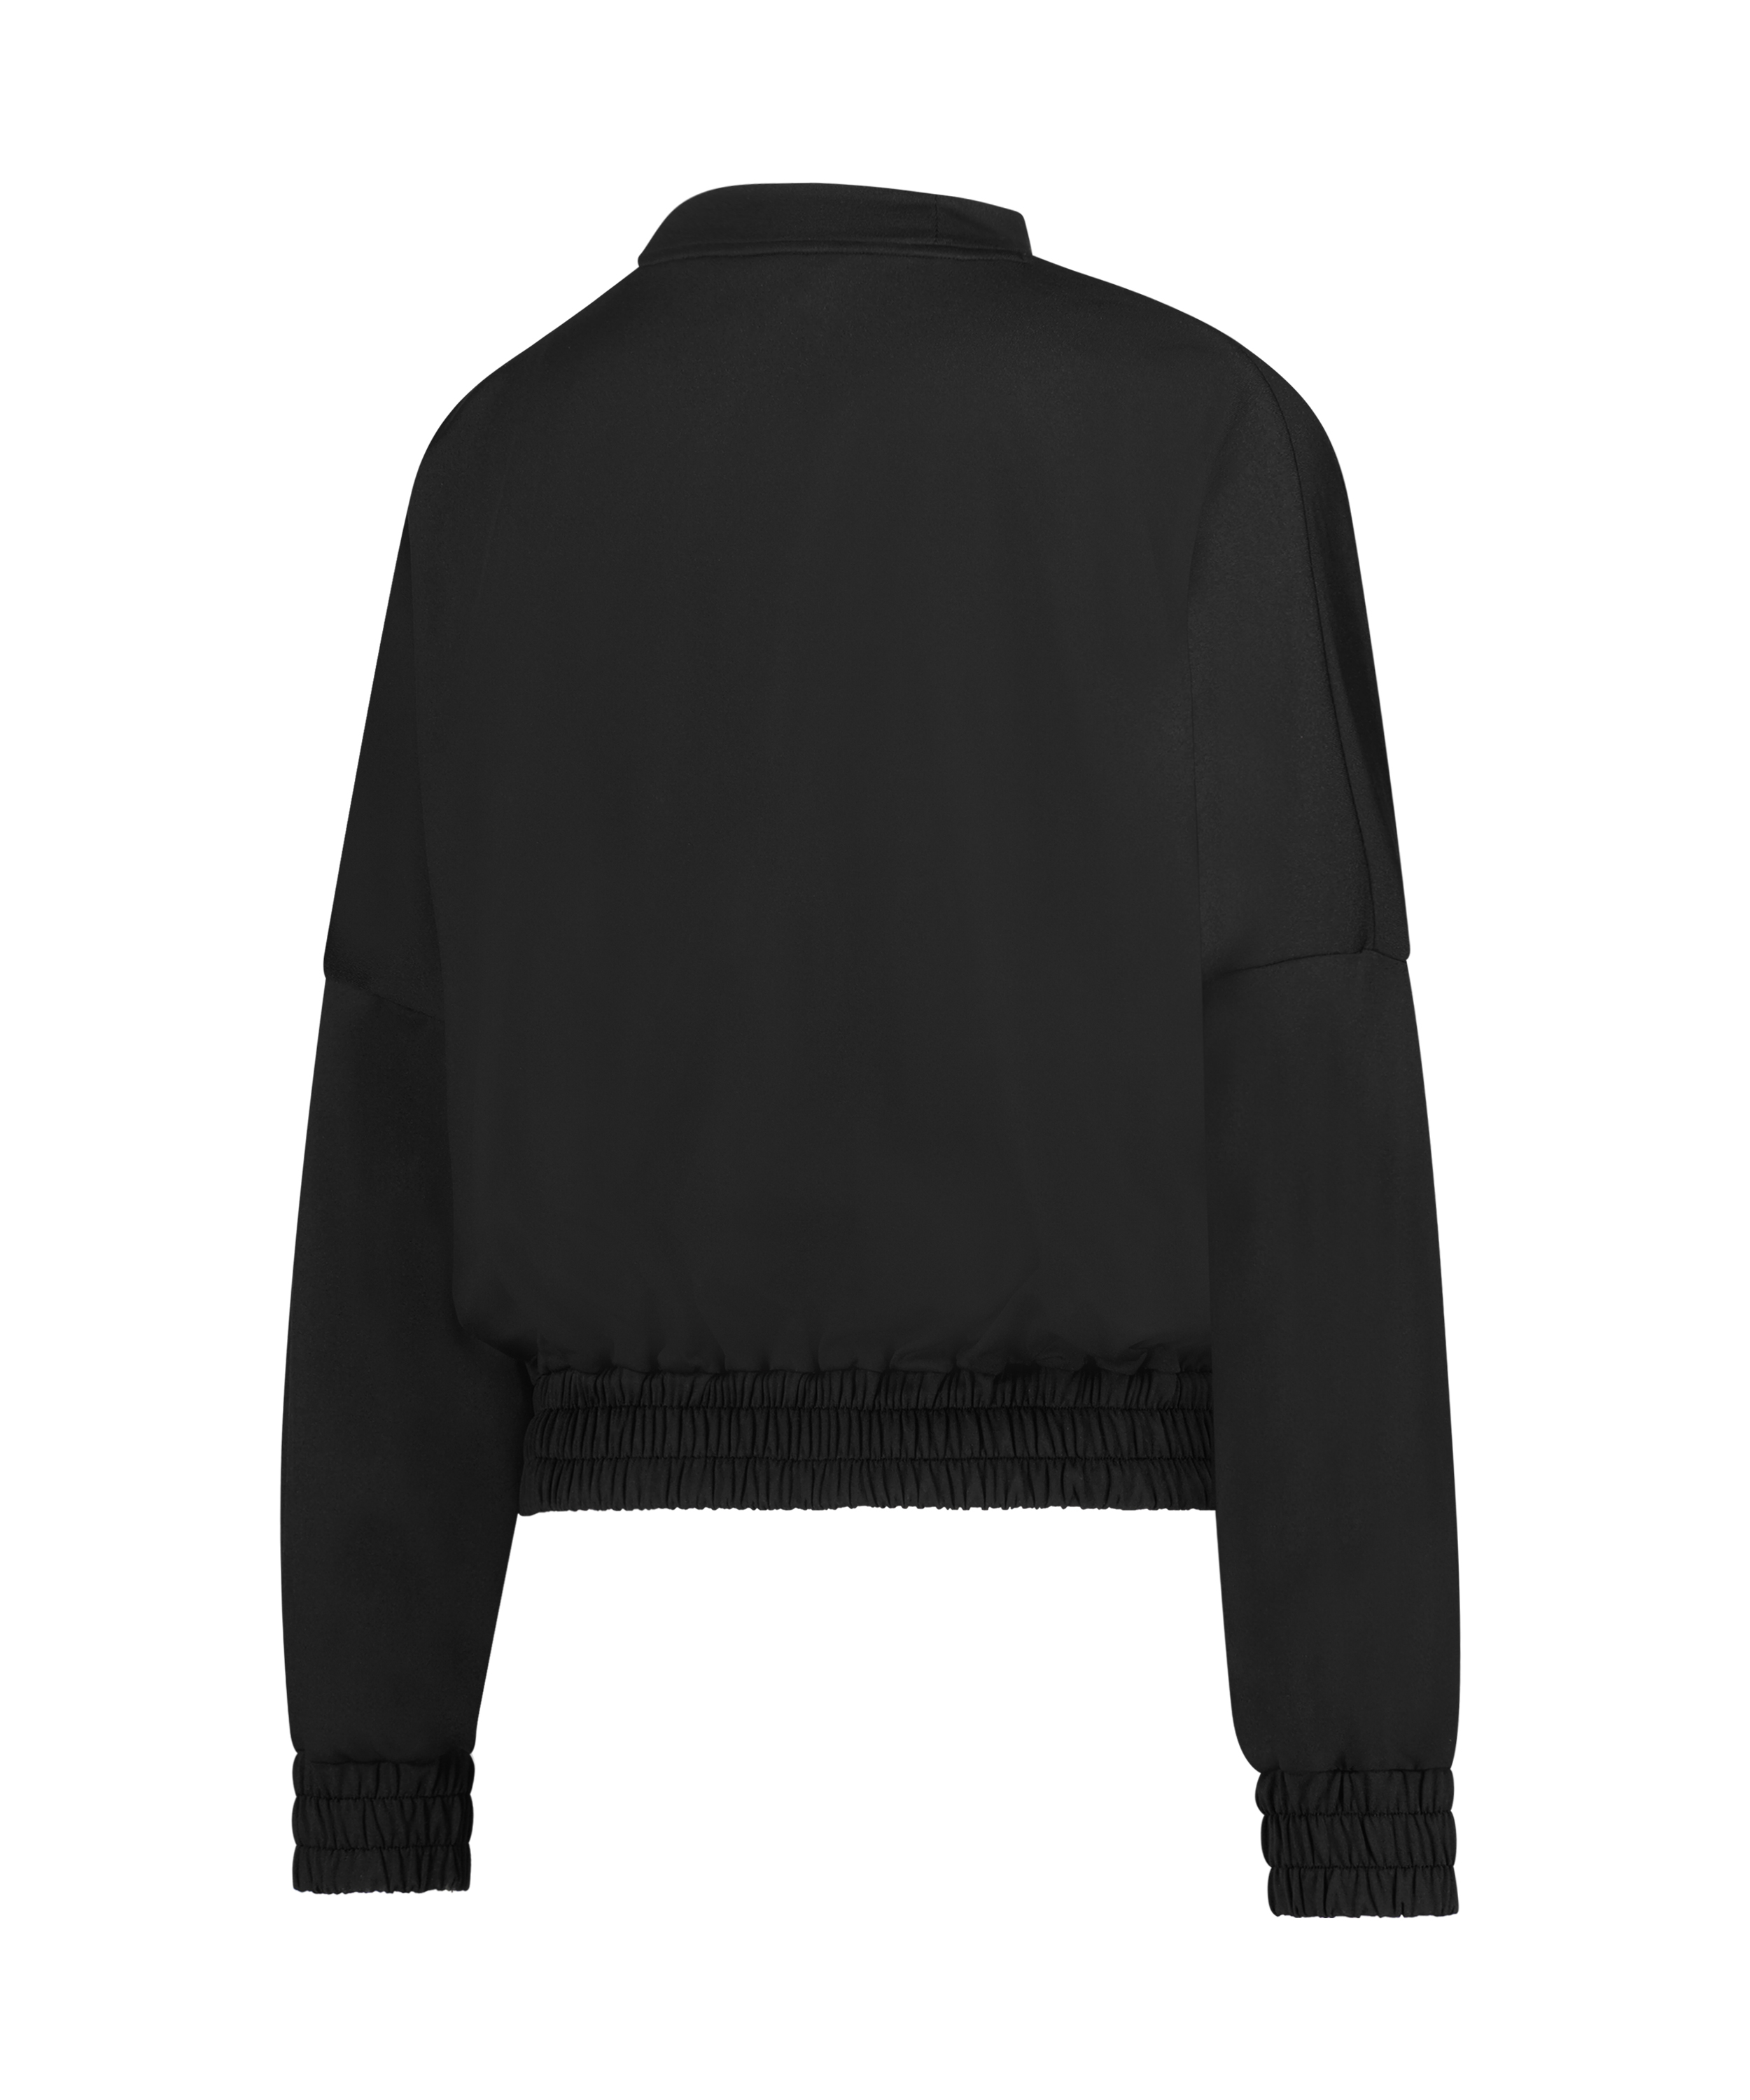 HKMX Sweater Flow, Zwart, main